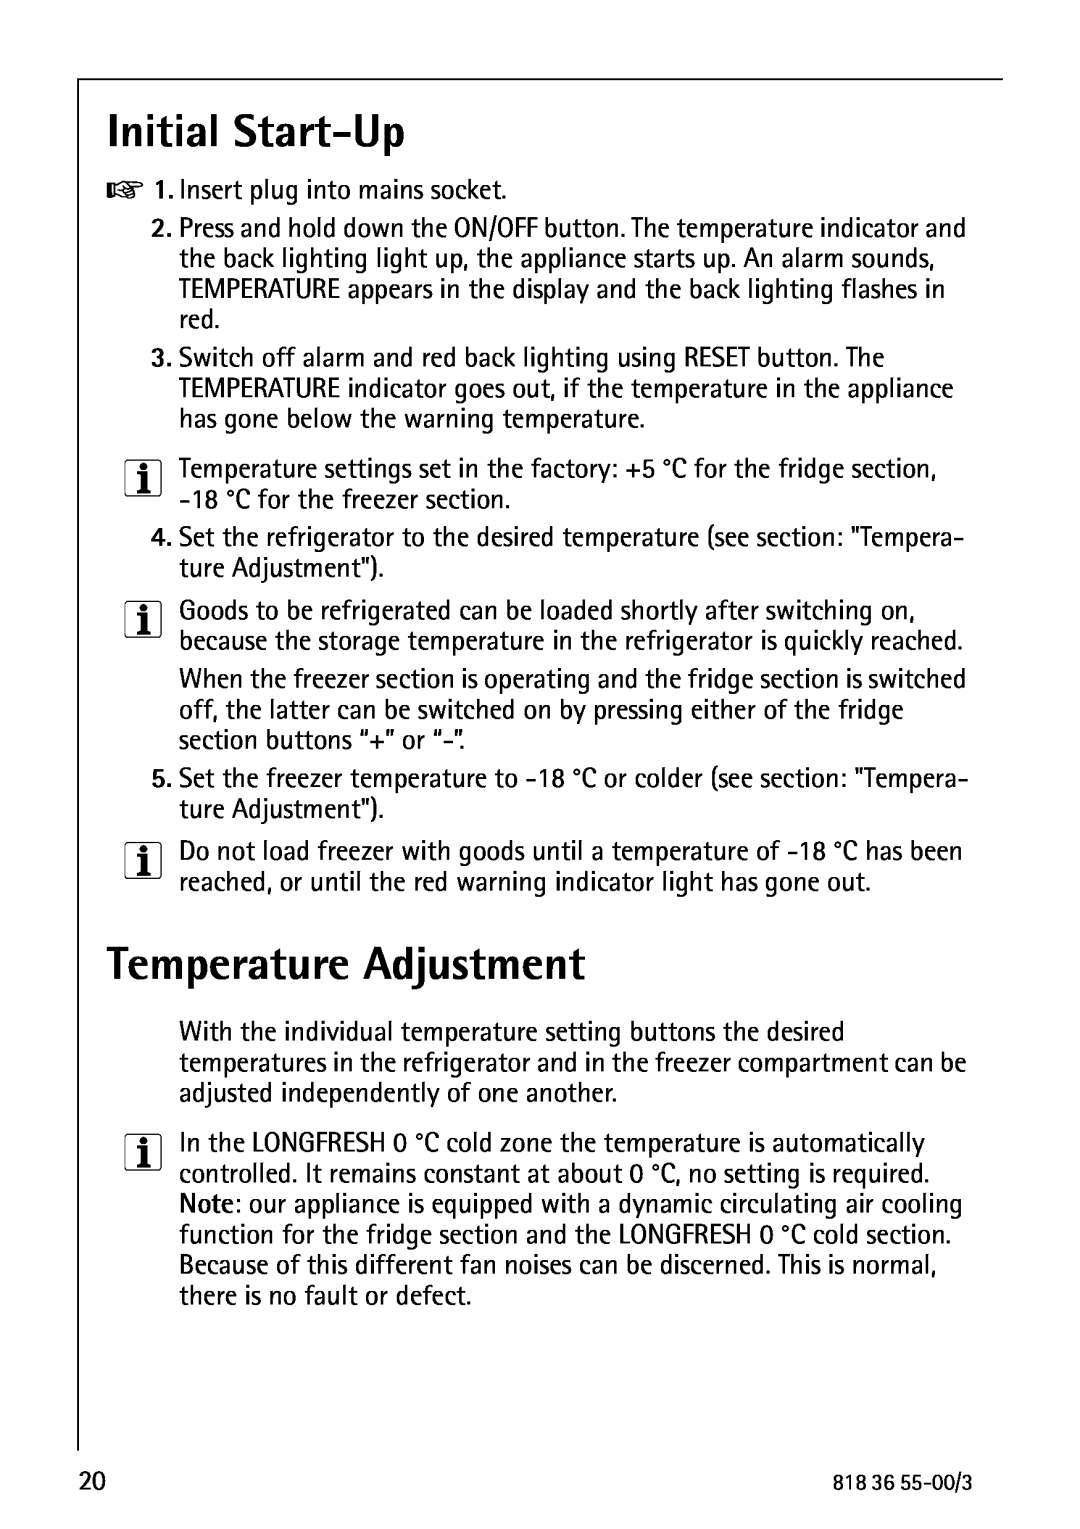 AEG 86378-KG operating instructions Initial Start-Up, Temperature Adjustment 